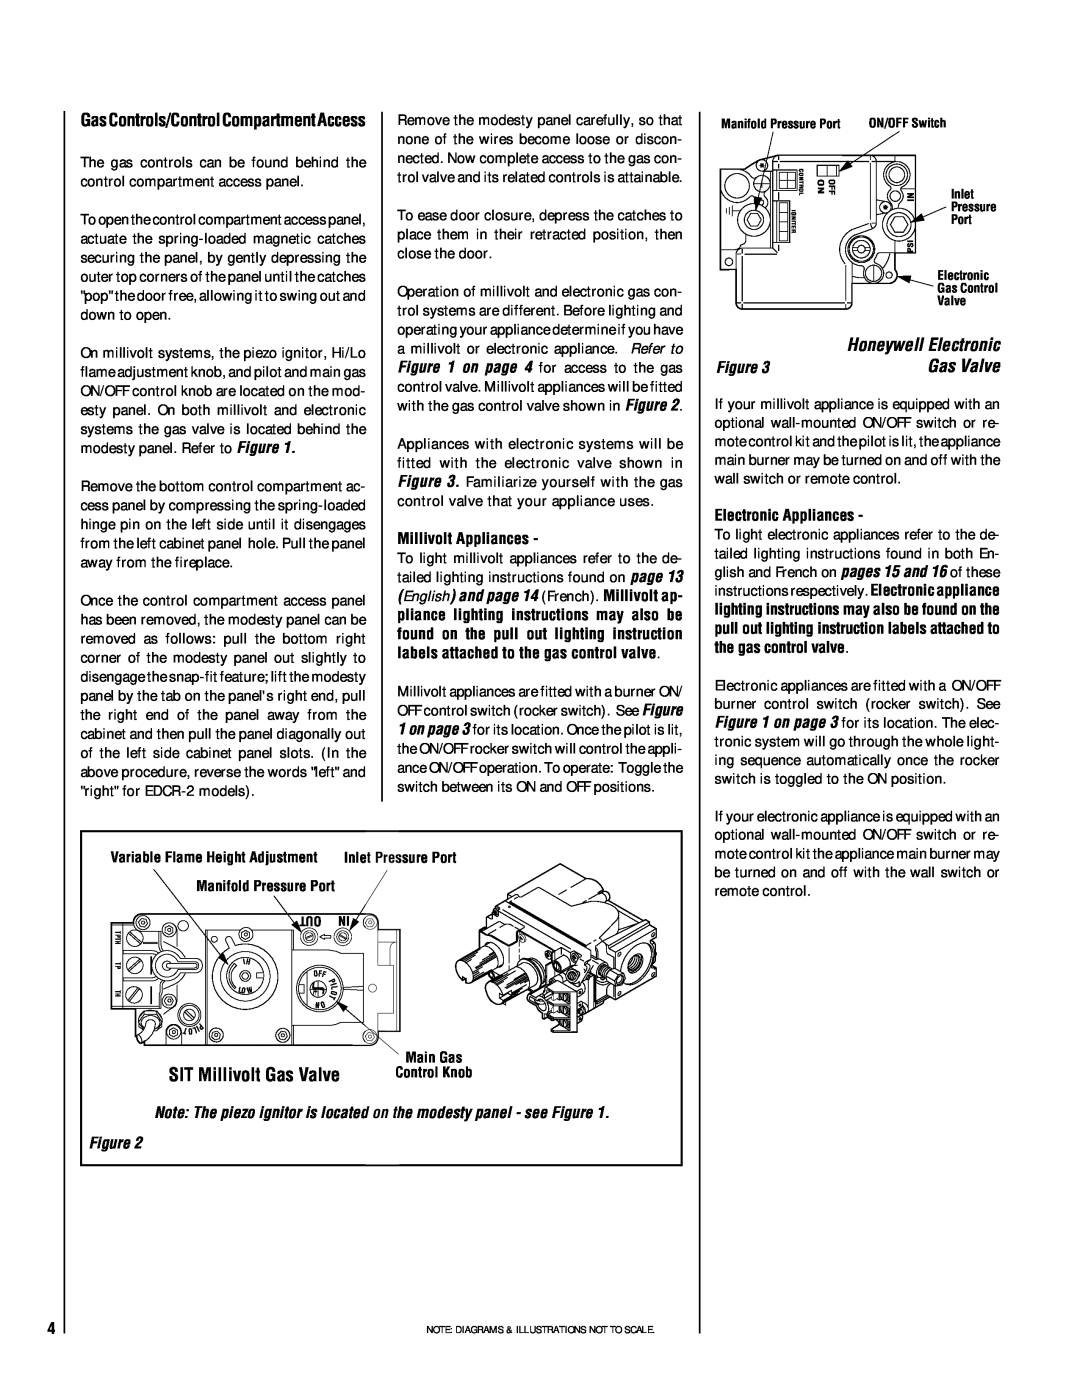 Lennox Hearth EBSTPM-2 manual SIT Millivolt Gas Valve, GasControls/ControlCompartmentAccess, Millivolt Appliances, Figure 